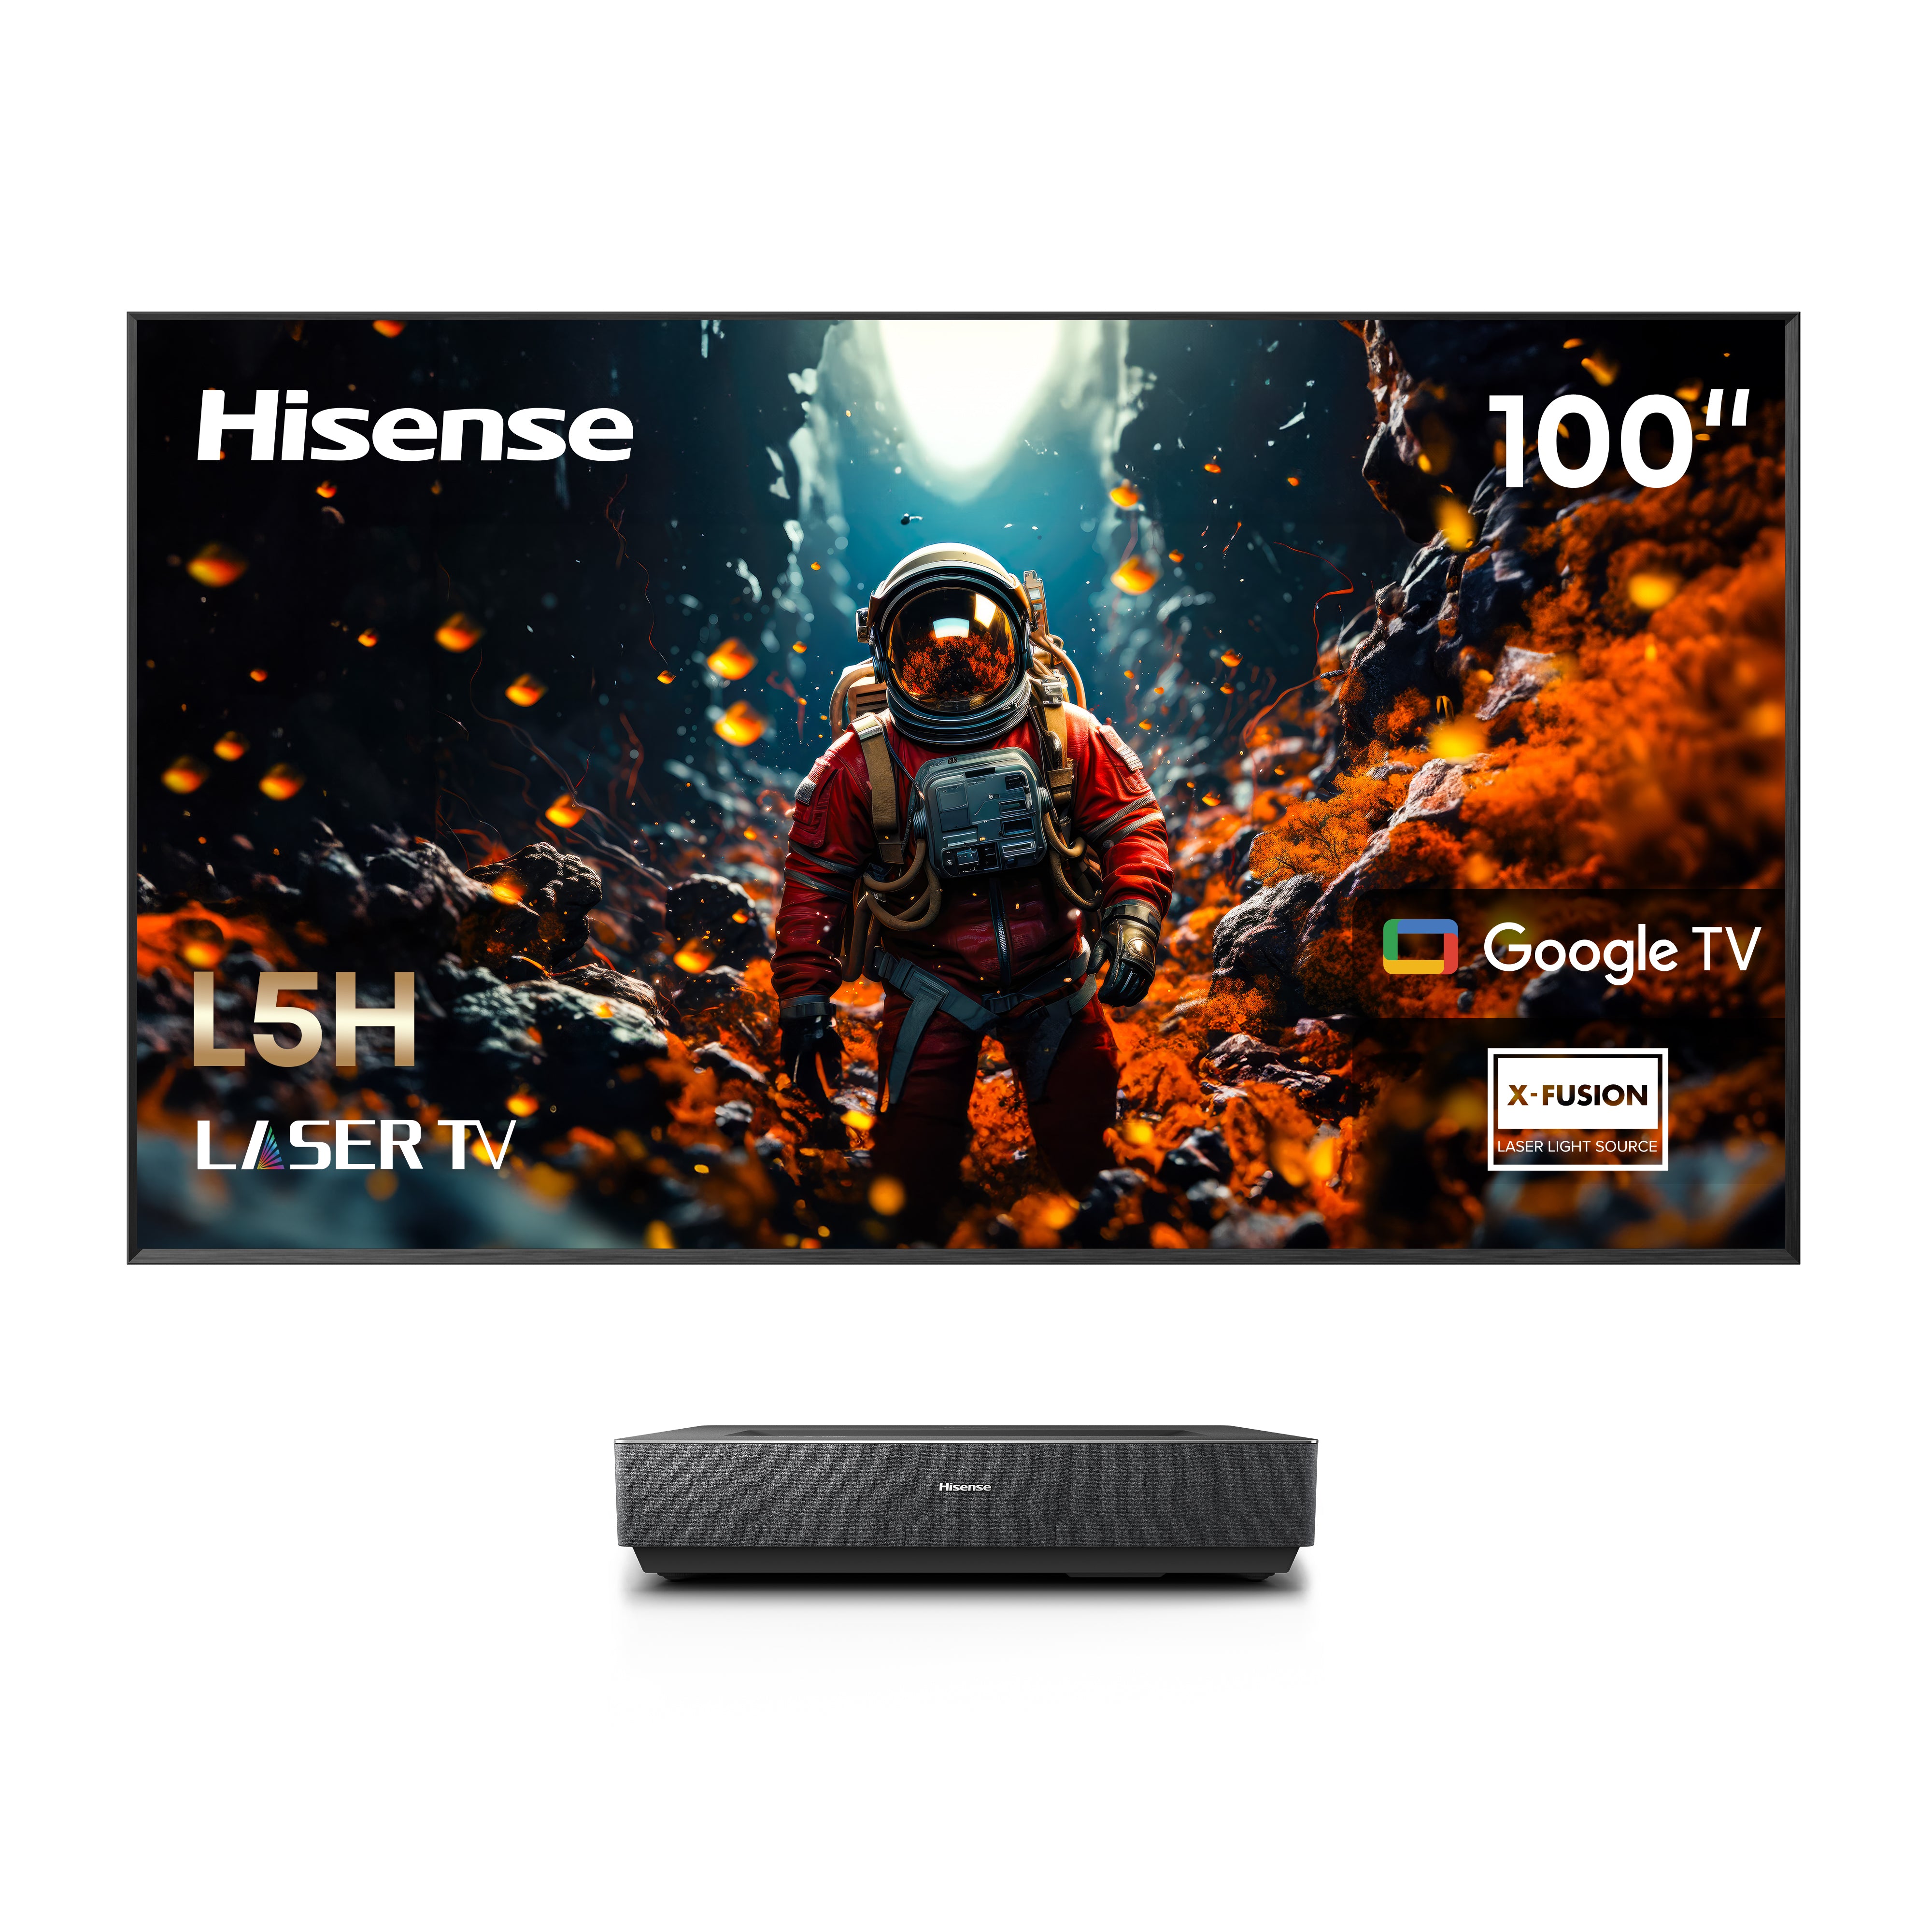 Hisense 100" L5H Ultra Short Throw 4K Laser TV